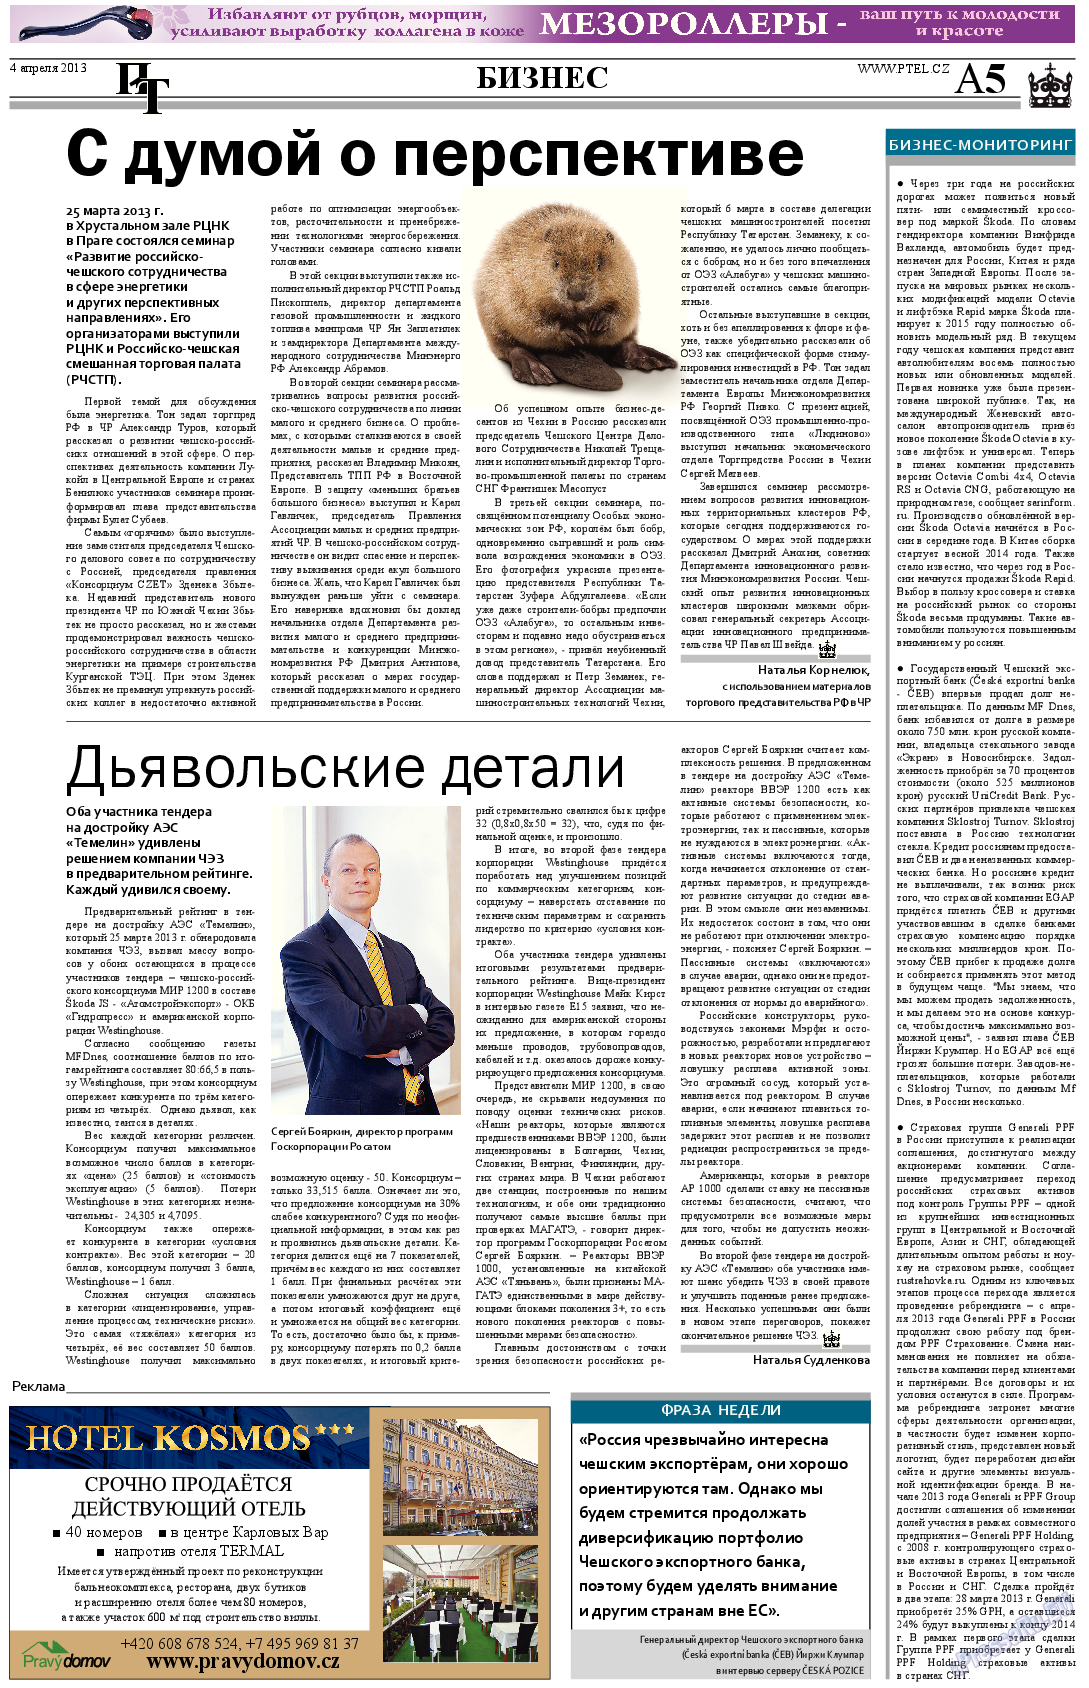 Пражский телеграф, газета. 2013 №13 стр.5